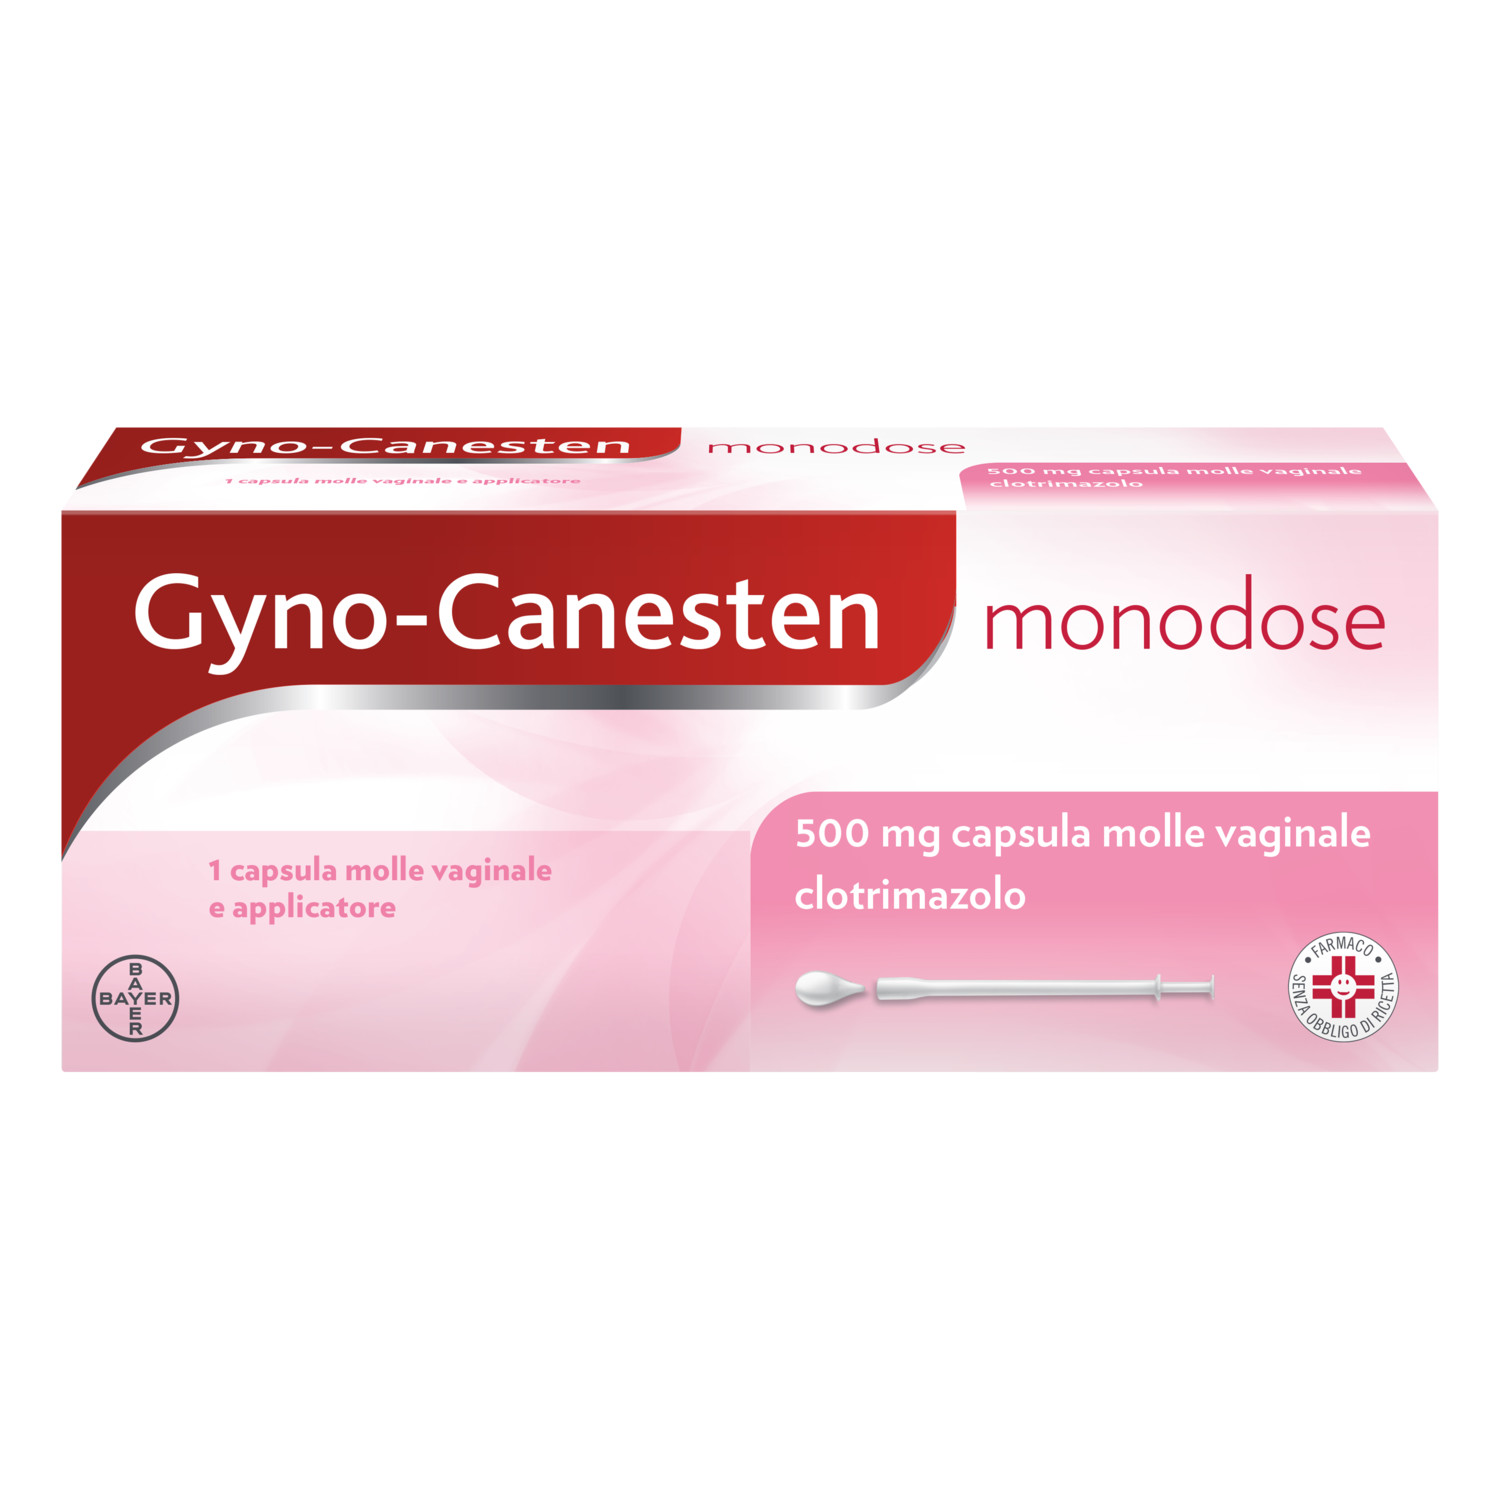 043850015 - GYNOCANESTEN MONODOSE*1 cps vag 500 mg - 7892011_1.jpg